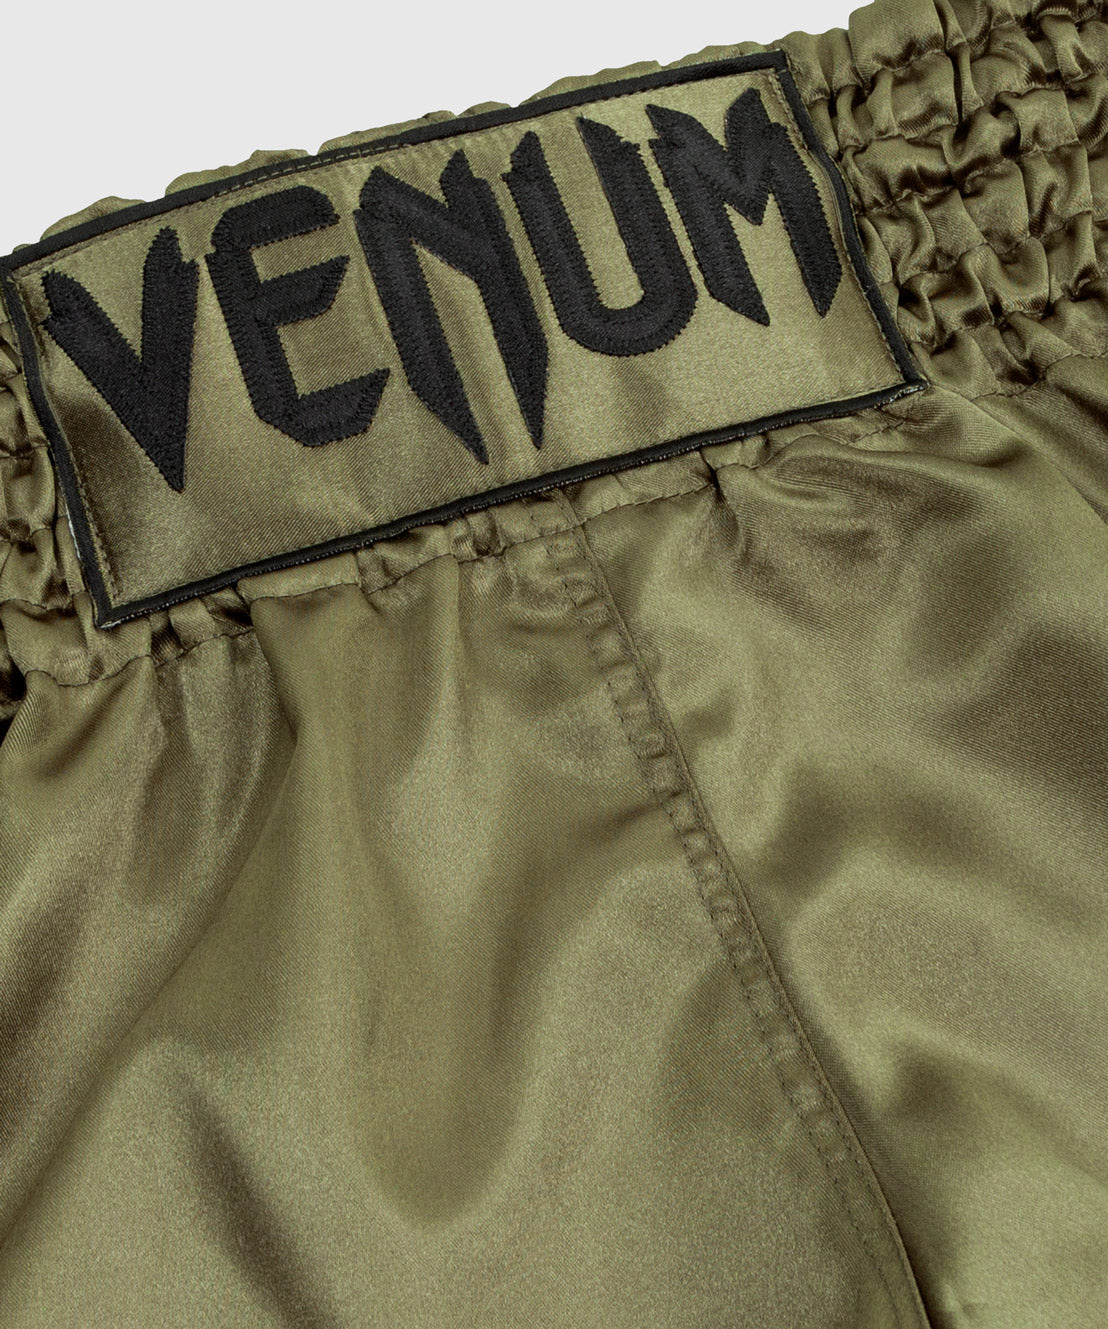 Venum Muay Thai Shorts Classic - Khaki/Black